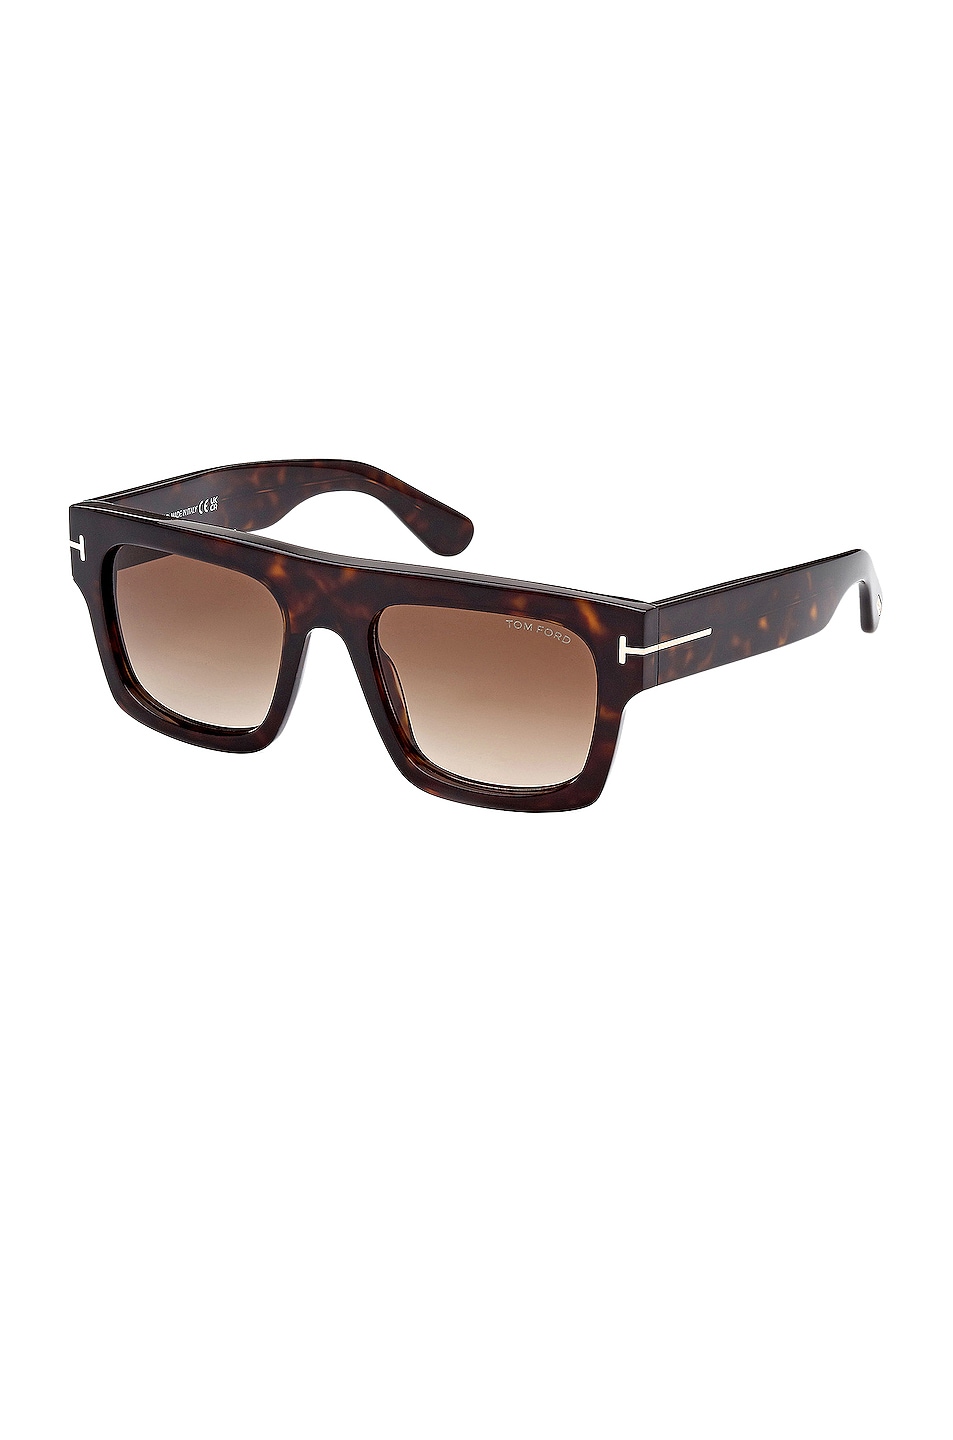 Image 1 of TOM FORD Fausto Sunglasses in Shiny Dark Havana & Gradient Brown